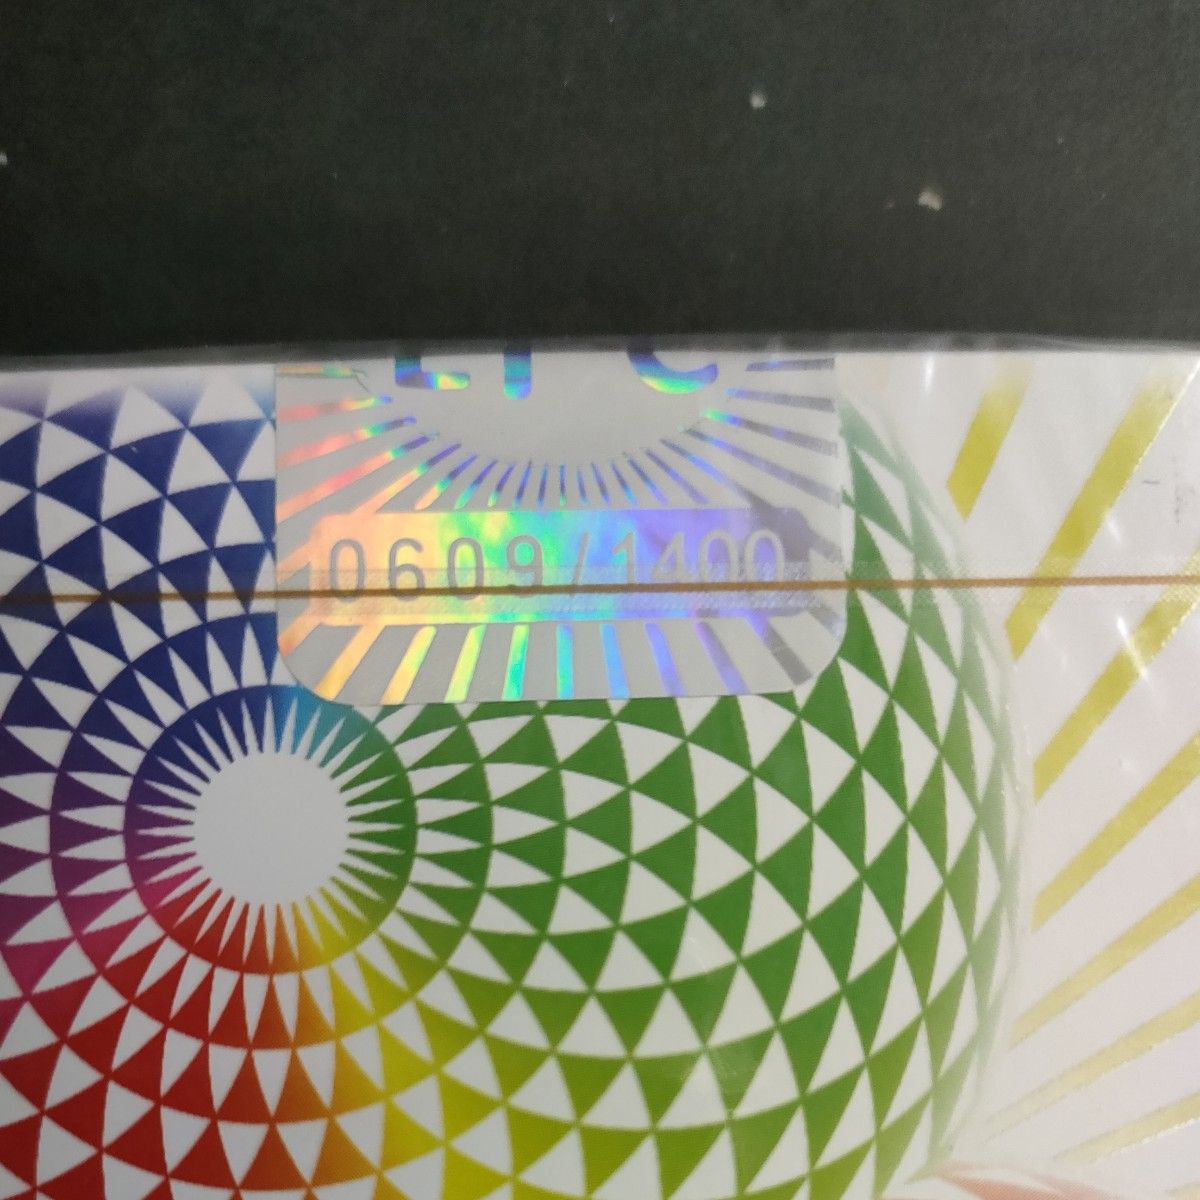 [世界1400個限定]  PRISM PLAYING CARDS